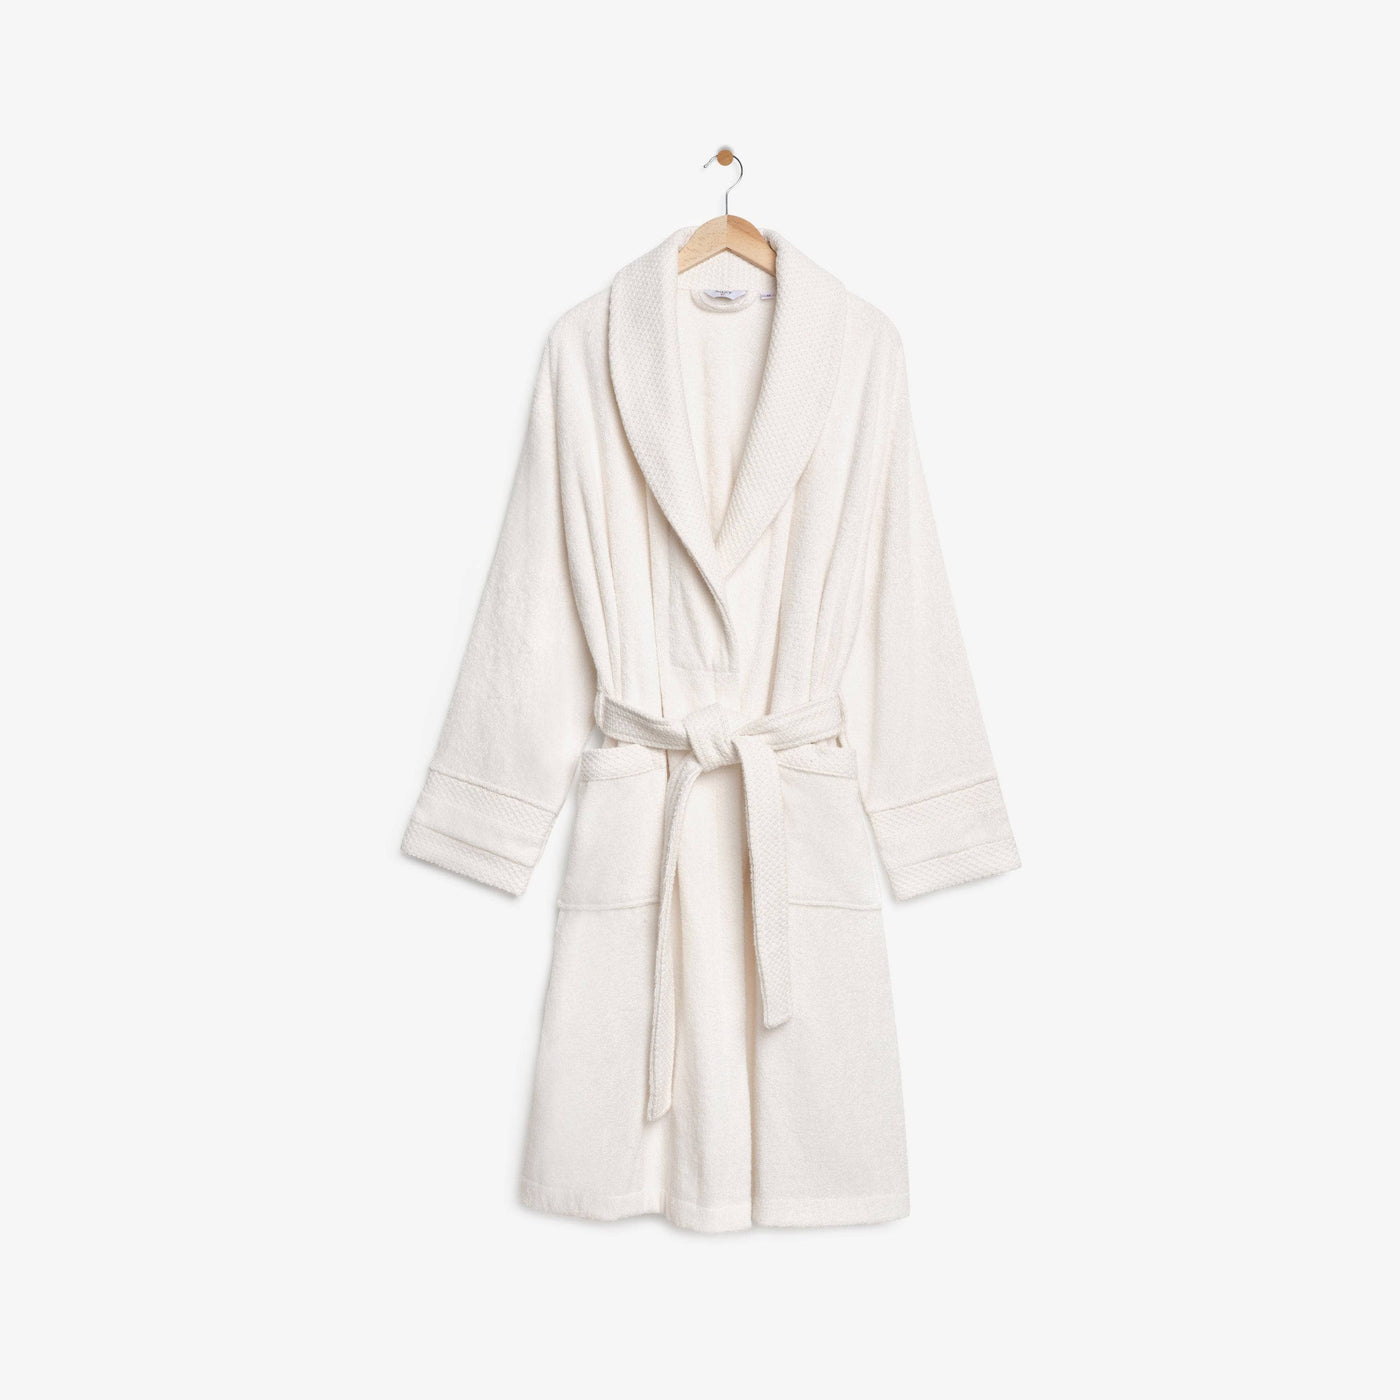 Rosalie Aqua Fibro Extra Soft 100% Turkish Cotton Women's Dressing Gown, Off-White, M 1